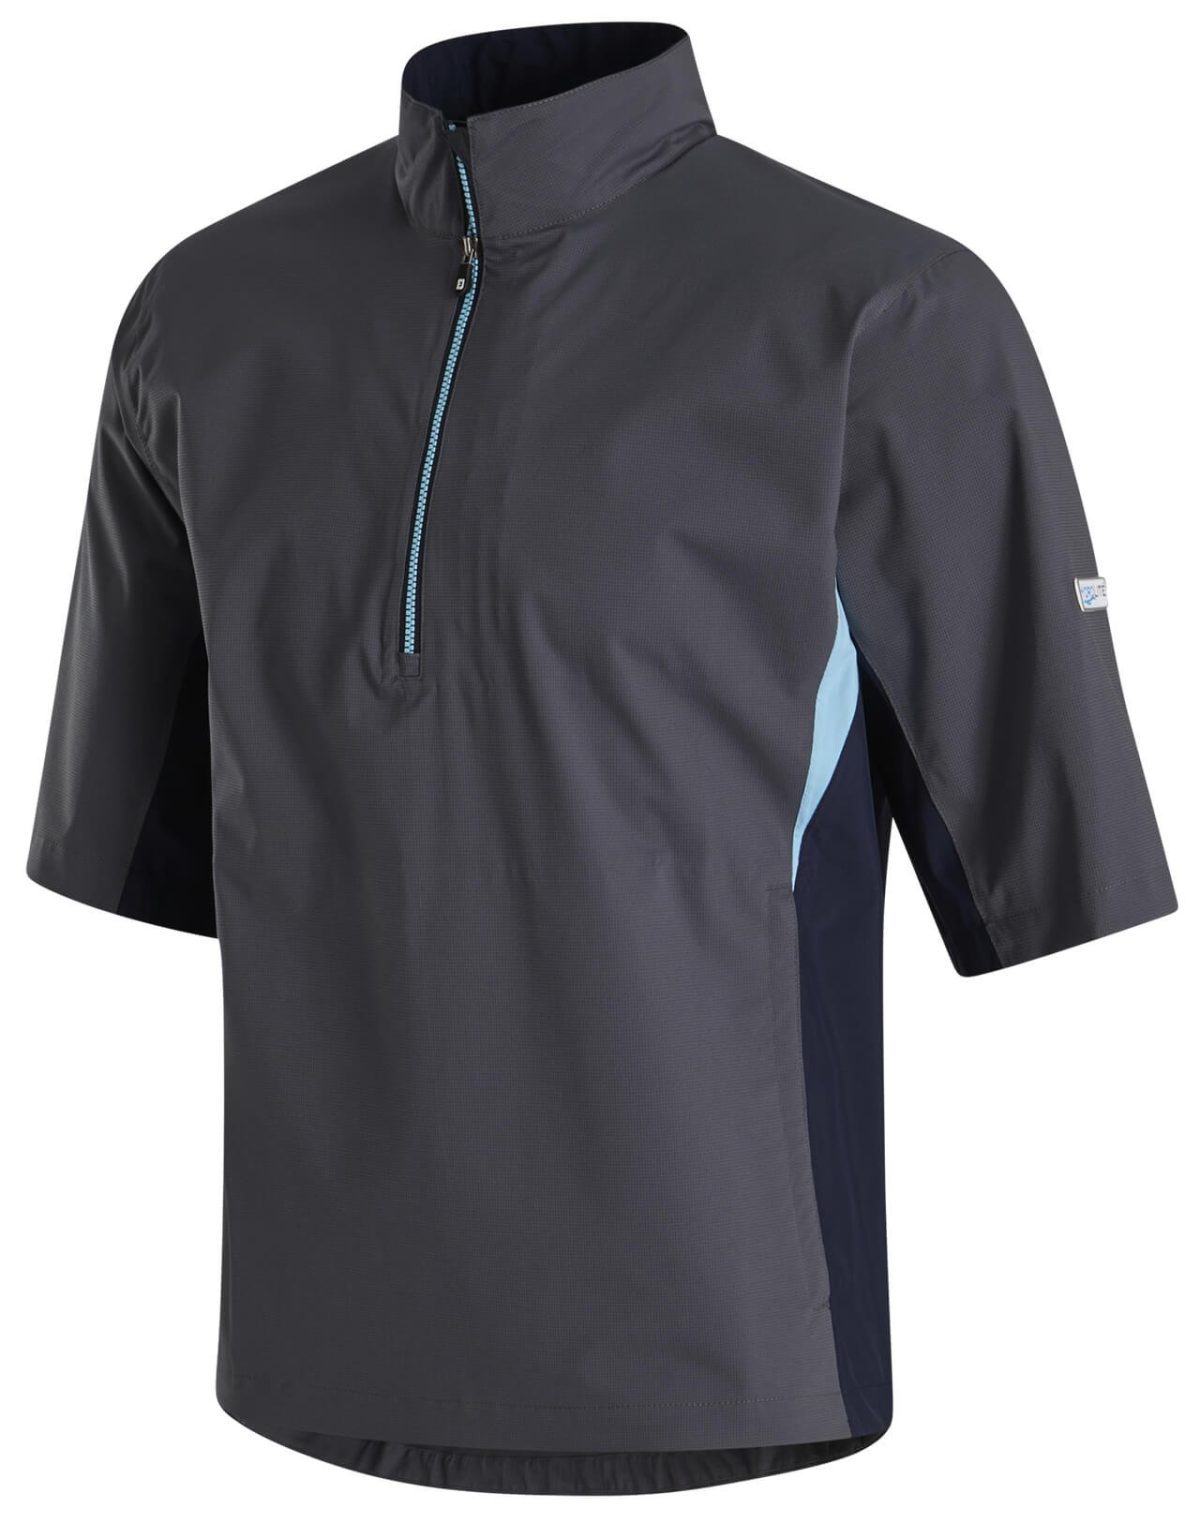 FootJoy Men's Hydrolite Short Sleeve Golf Rain Shirt, 100% Polyester in Charcoal/Navy/Light Blue, Size M